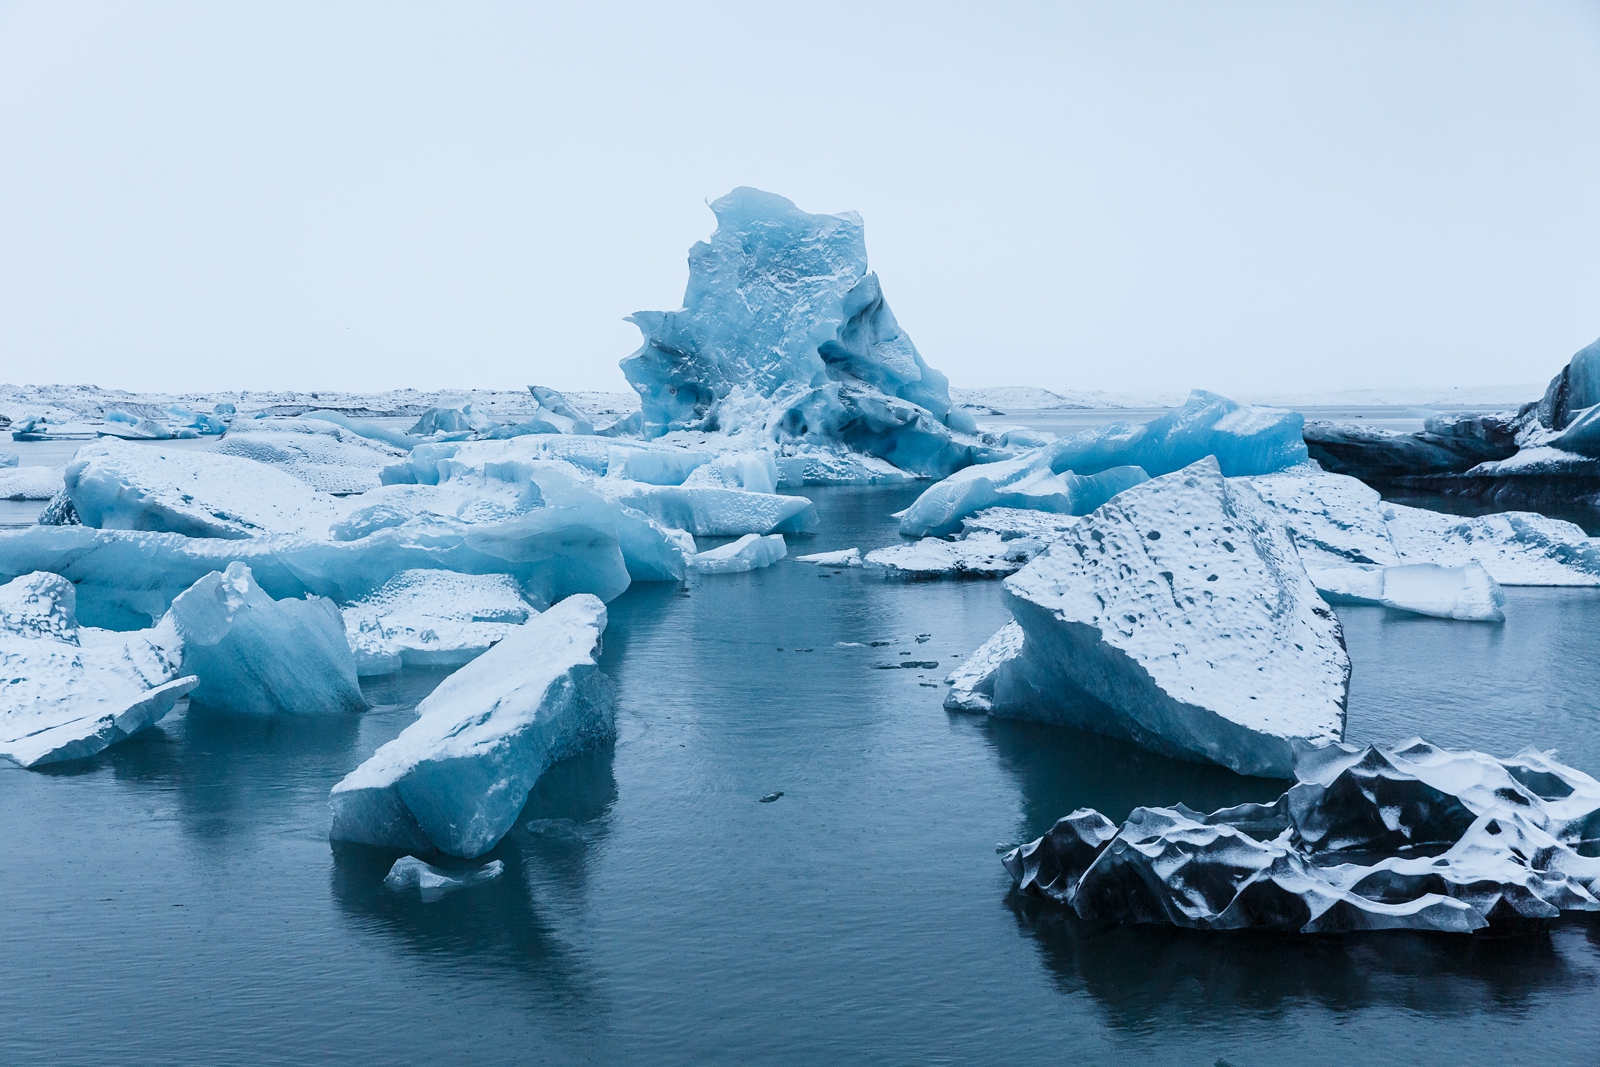 Huge icebergs float in Jökulsárlón lagoon in Iceland.